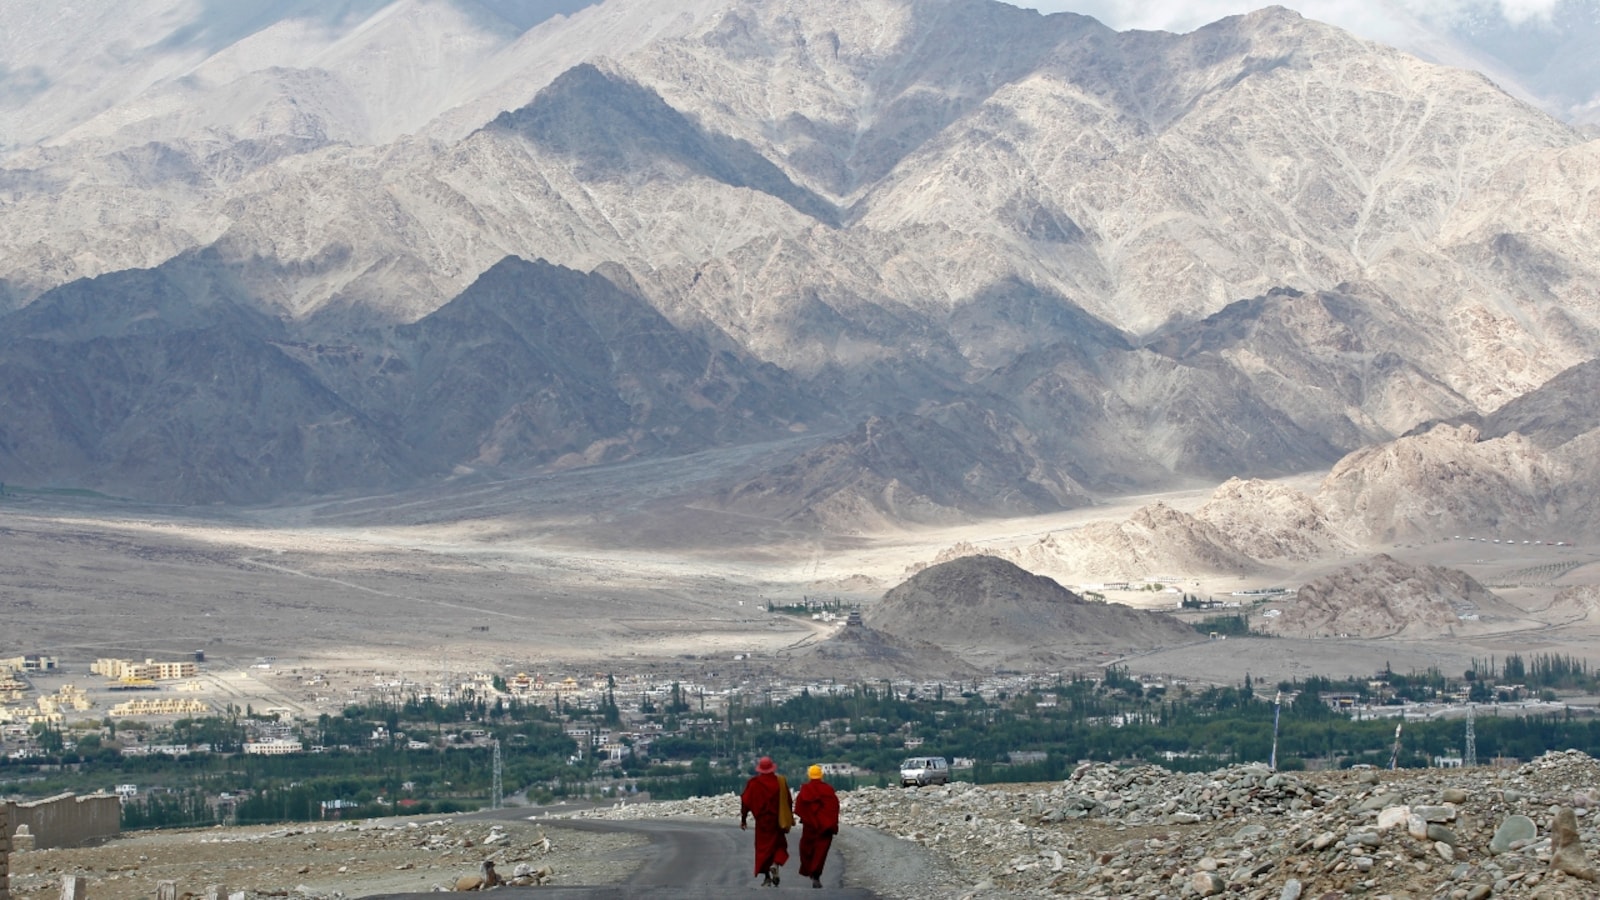 Nubra, The Administration of Union Territory of Ladakh